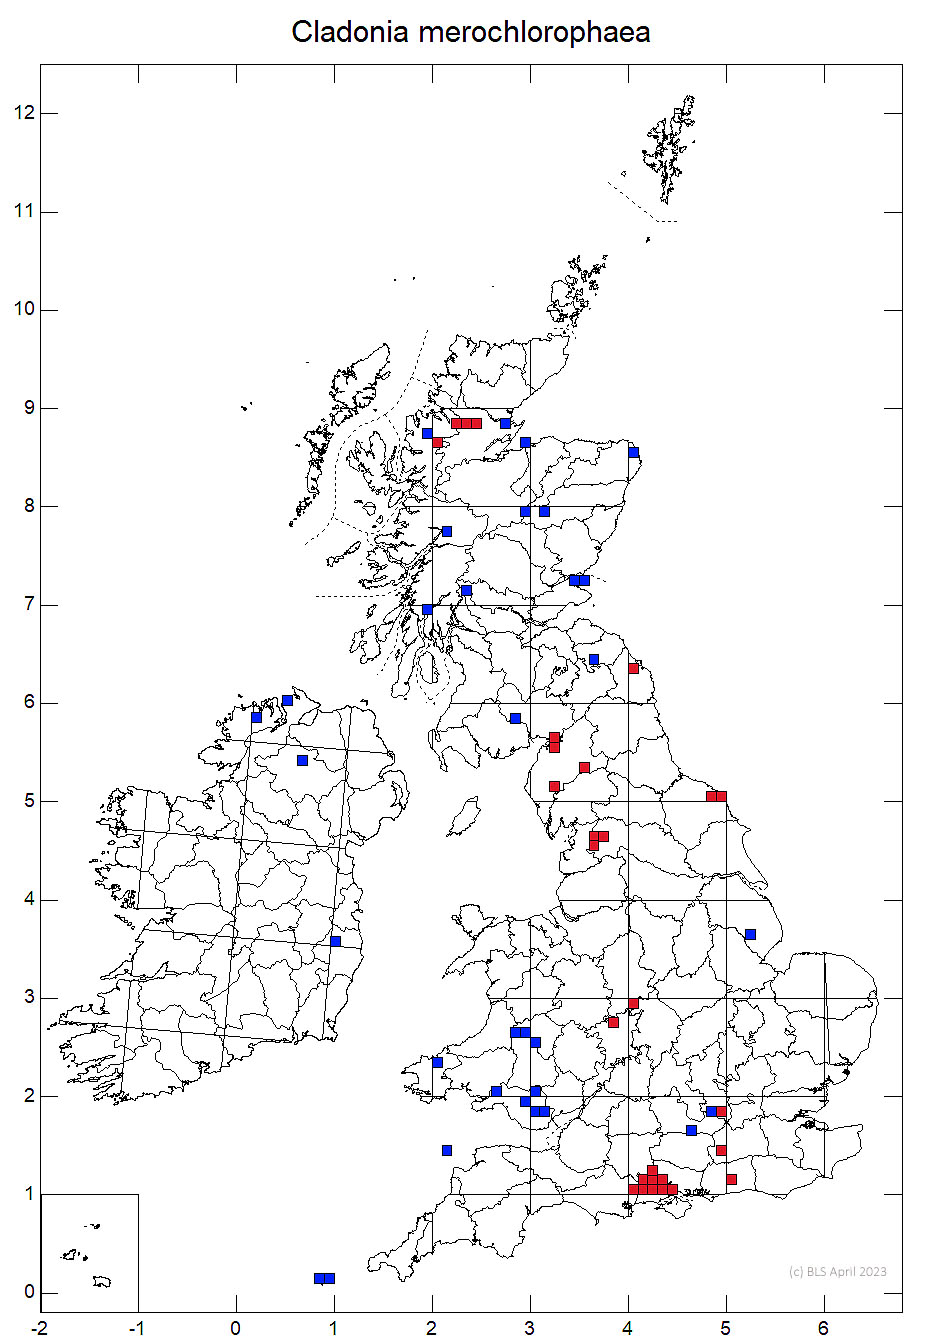 Cladonia merochlorophaea 10km sq distribution map